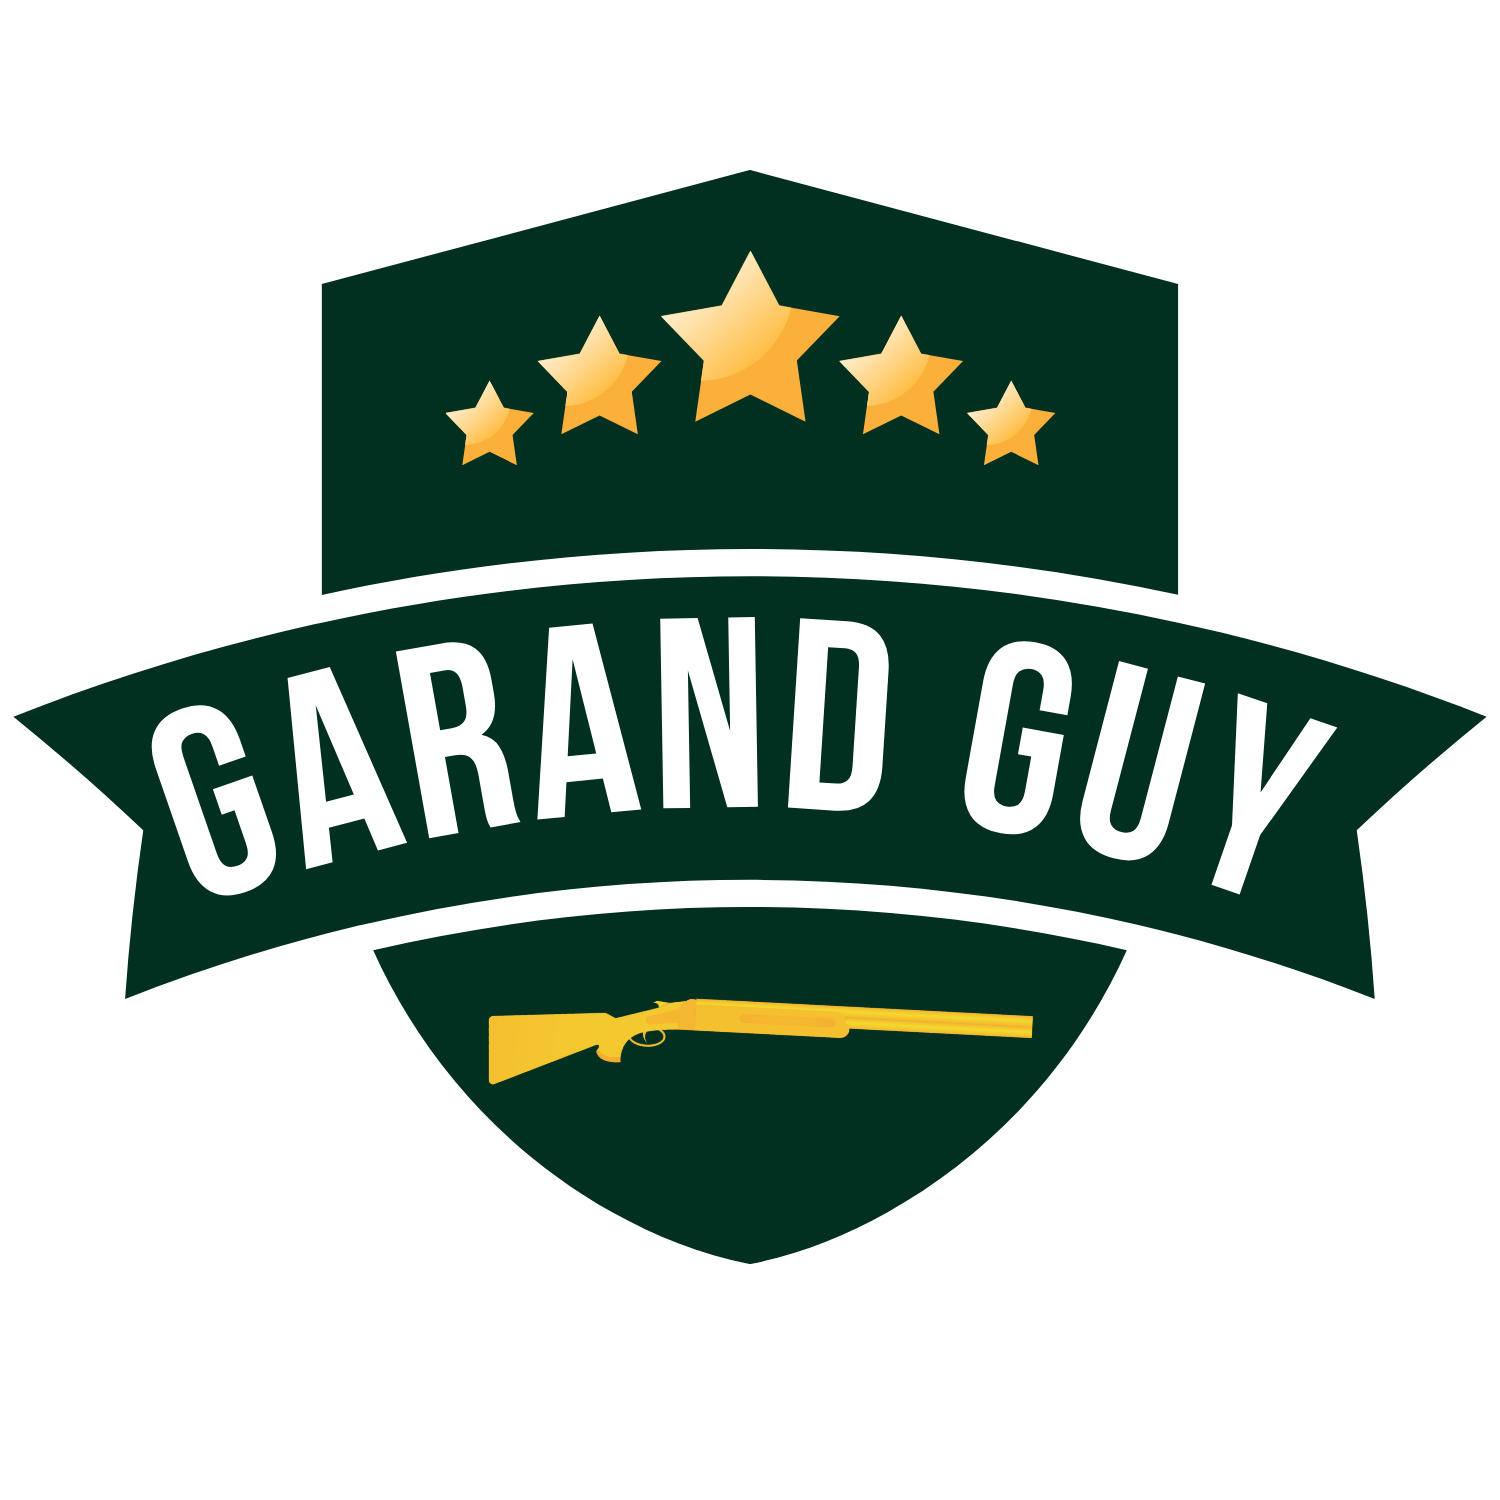 The Garand Guy